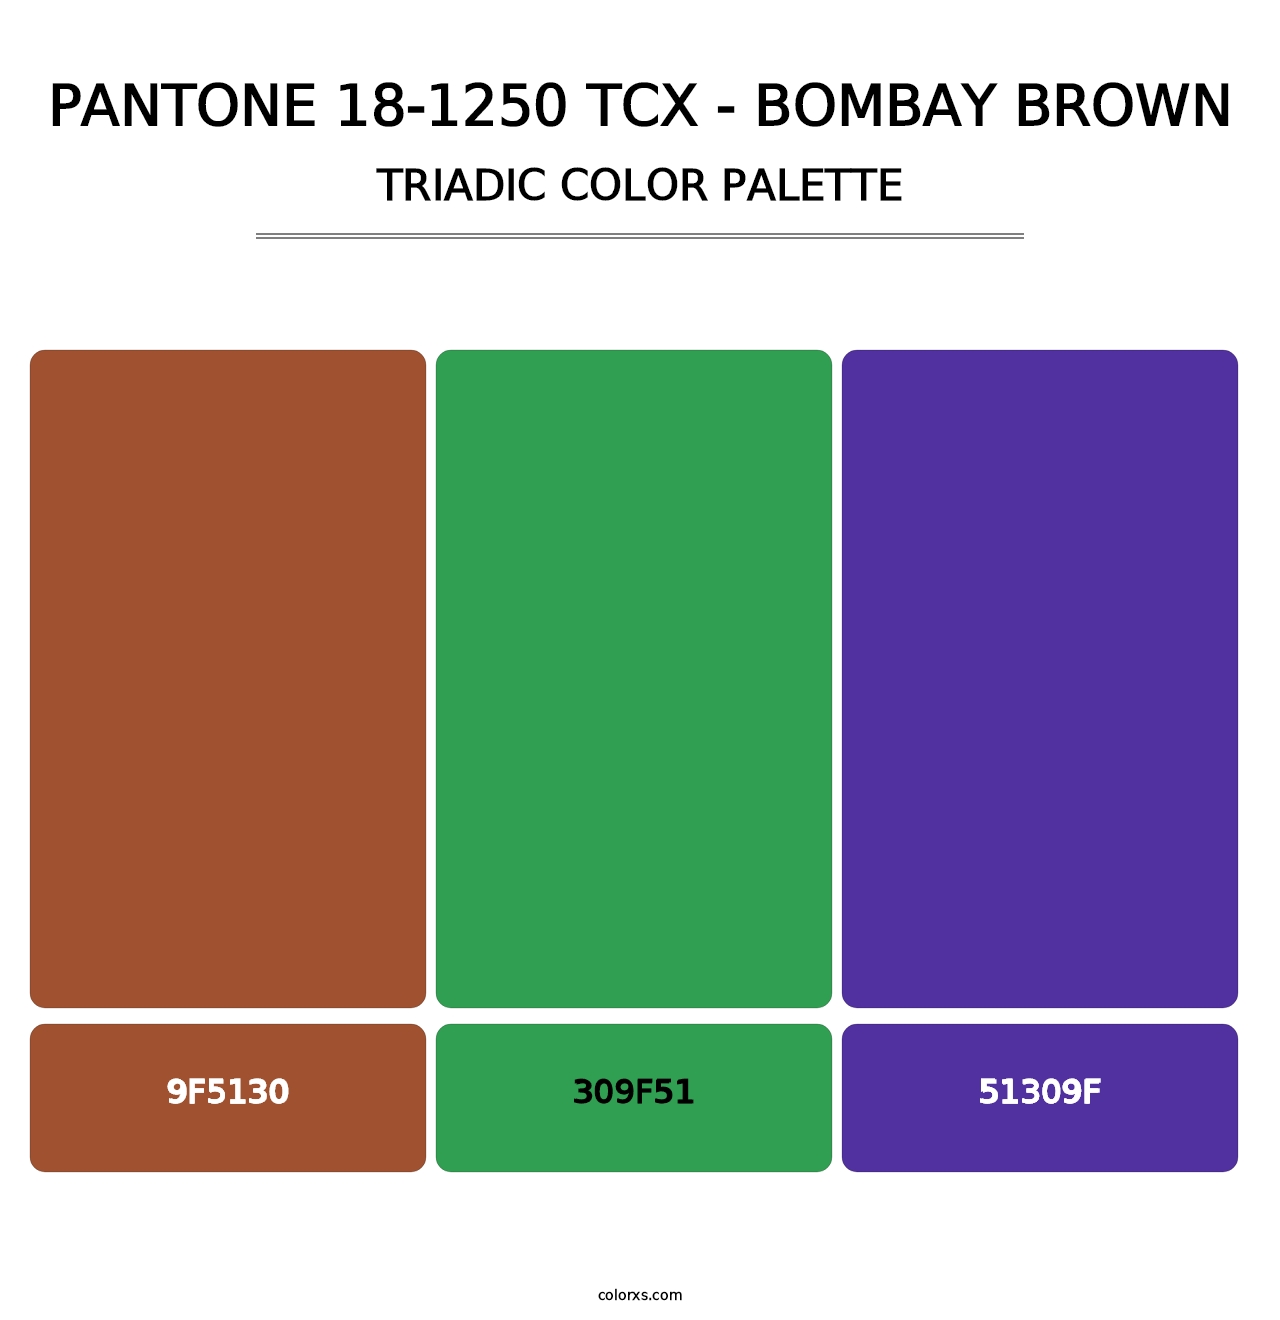 PANTONE 18-1250 TCX - Bombay Brown - Triadic Color Palette